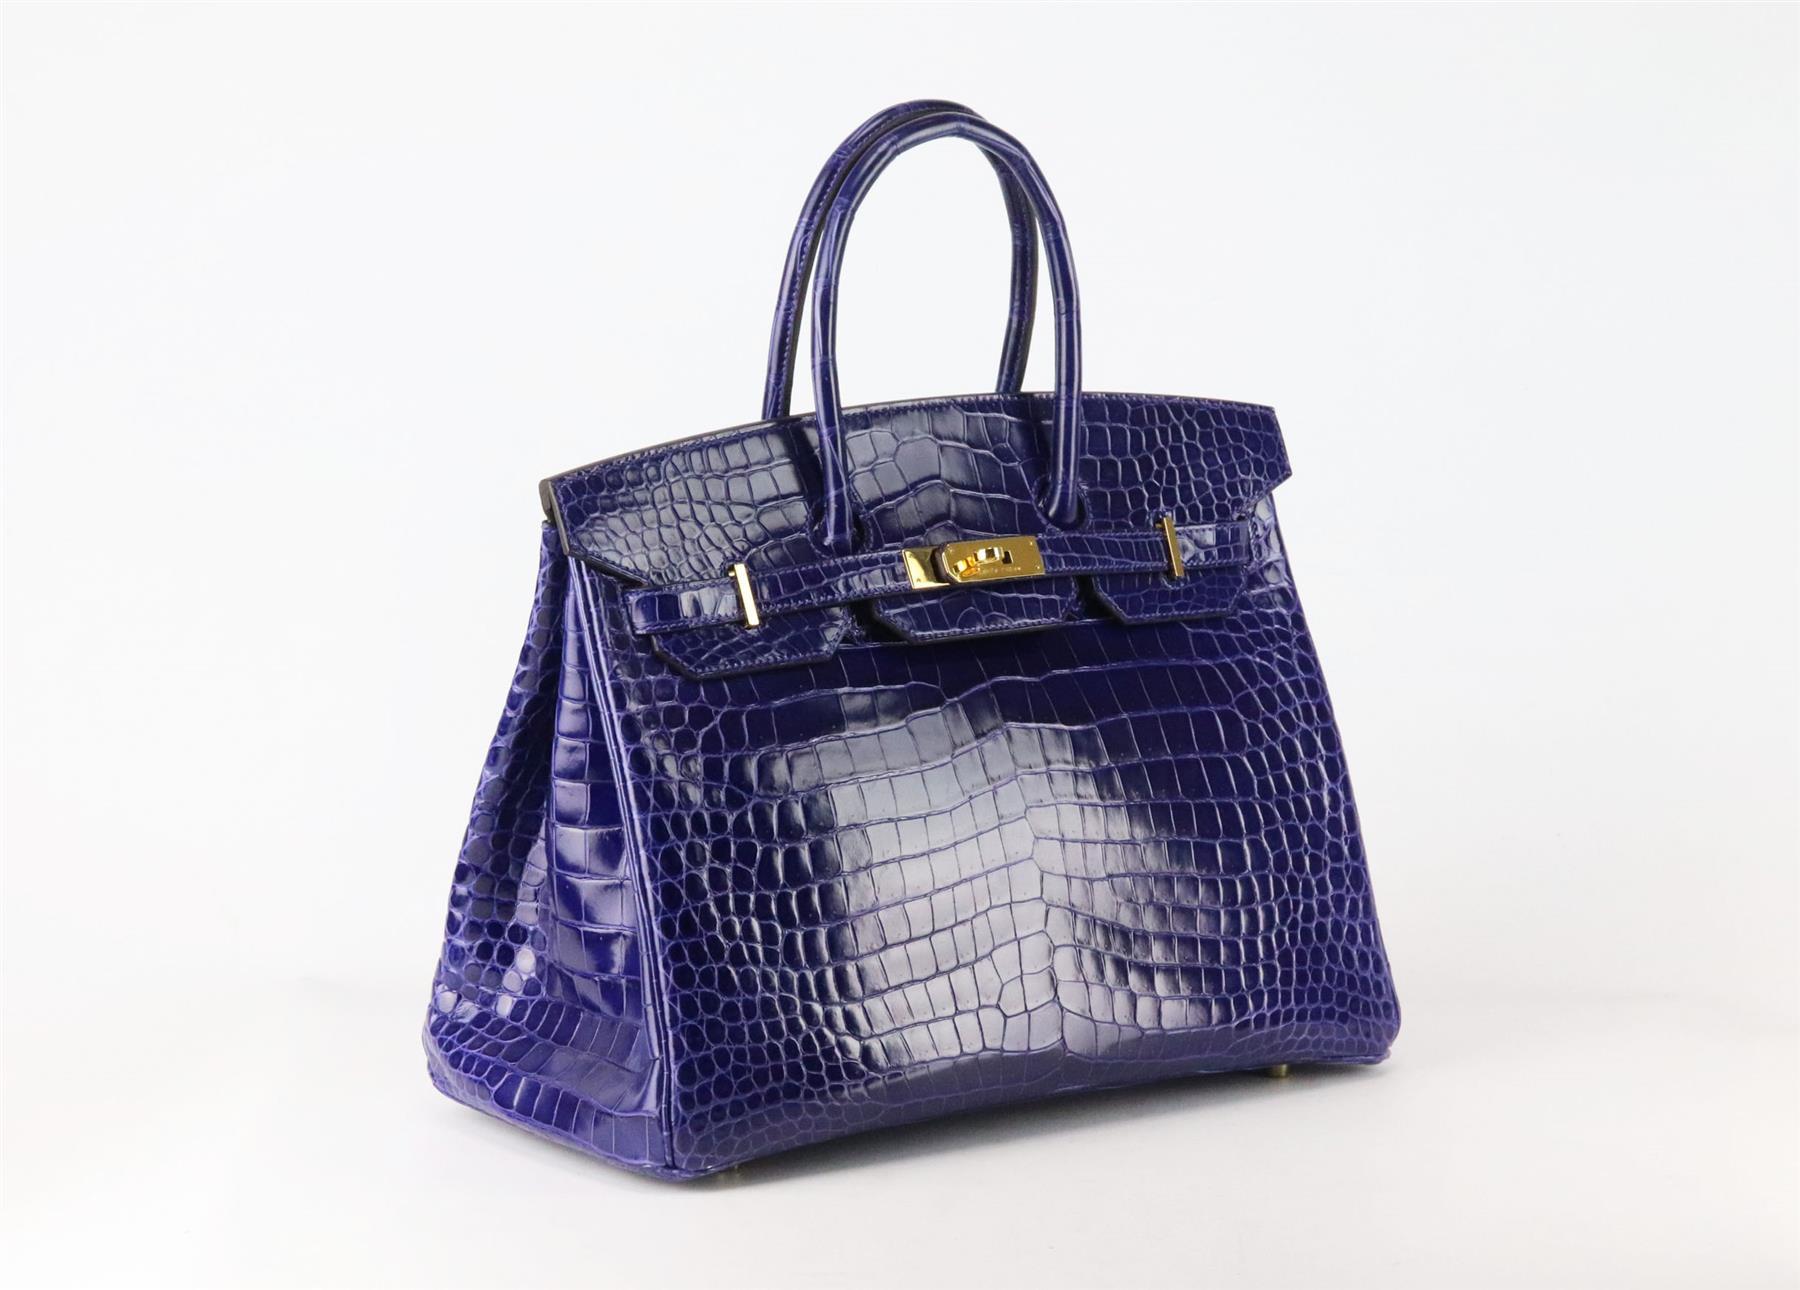 Hermès 2014 Birkin 35cm Porosus Crocodile Leather Bag In Excellent Condition For Sale In London, GB